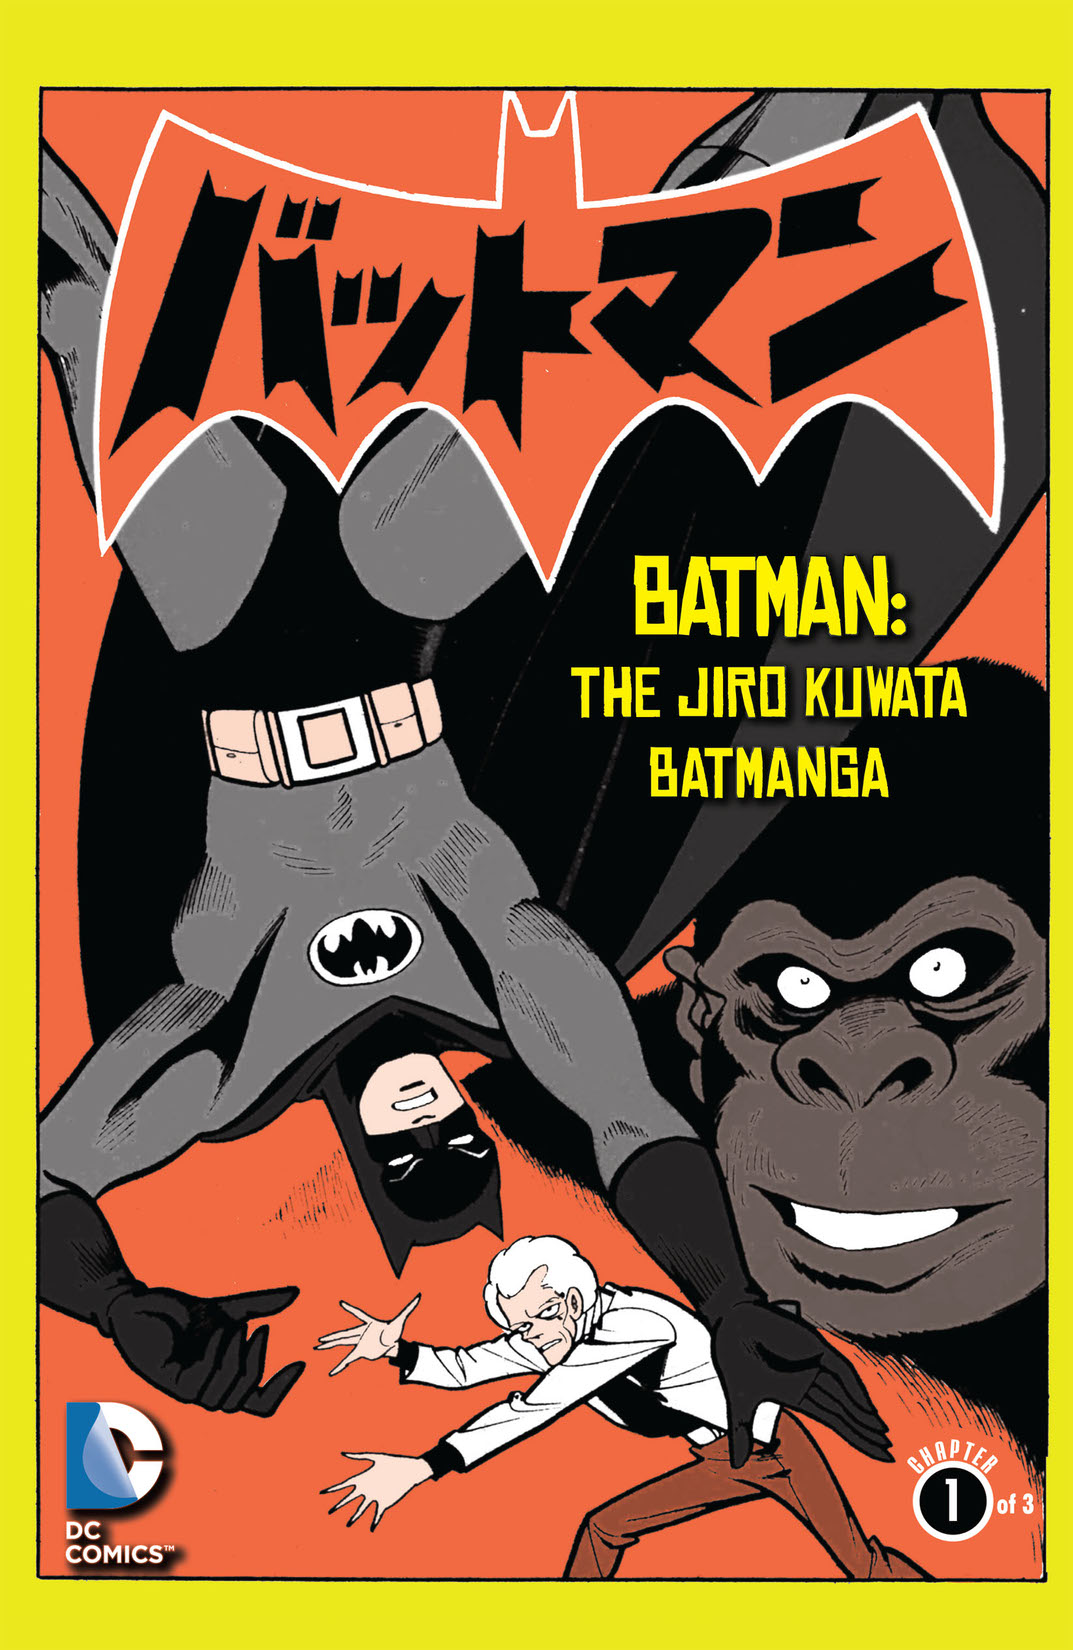 Batman: The Jiro Kuwata Batmanga #10 preview images